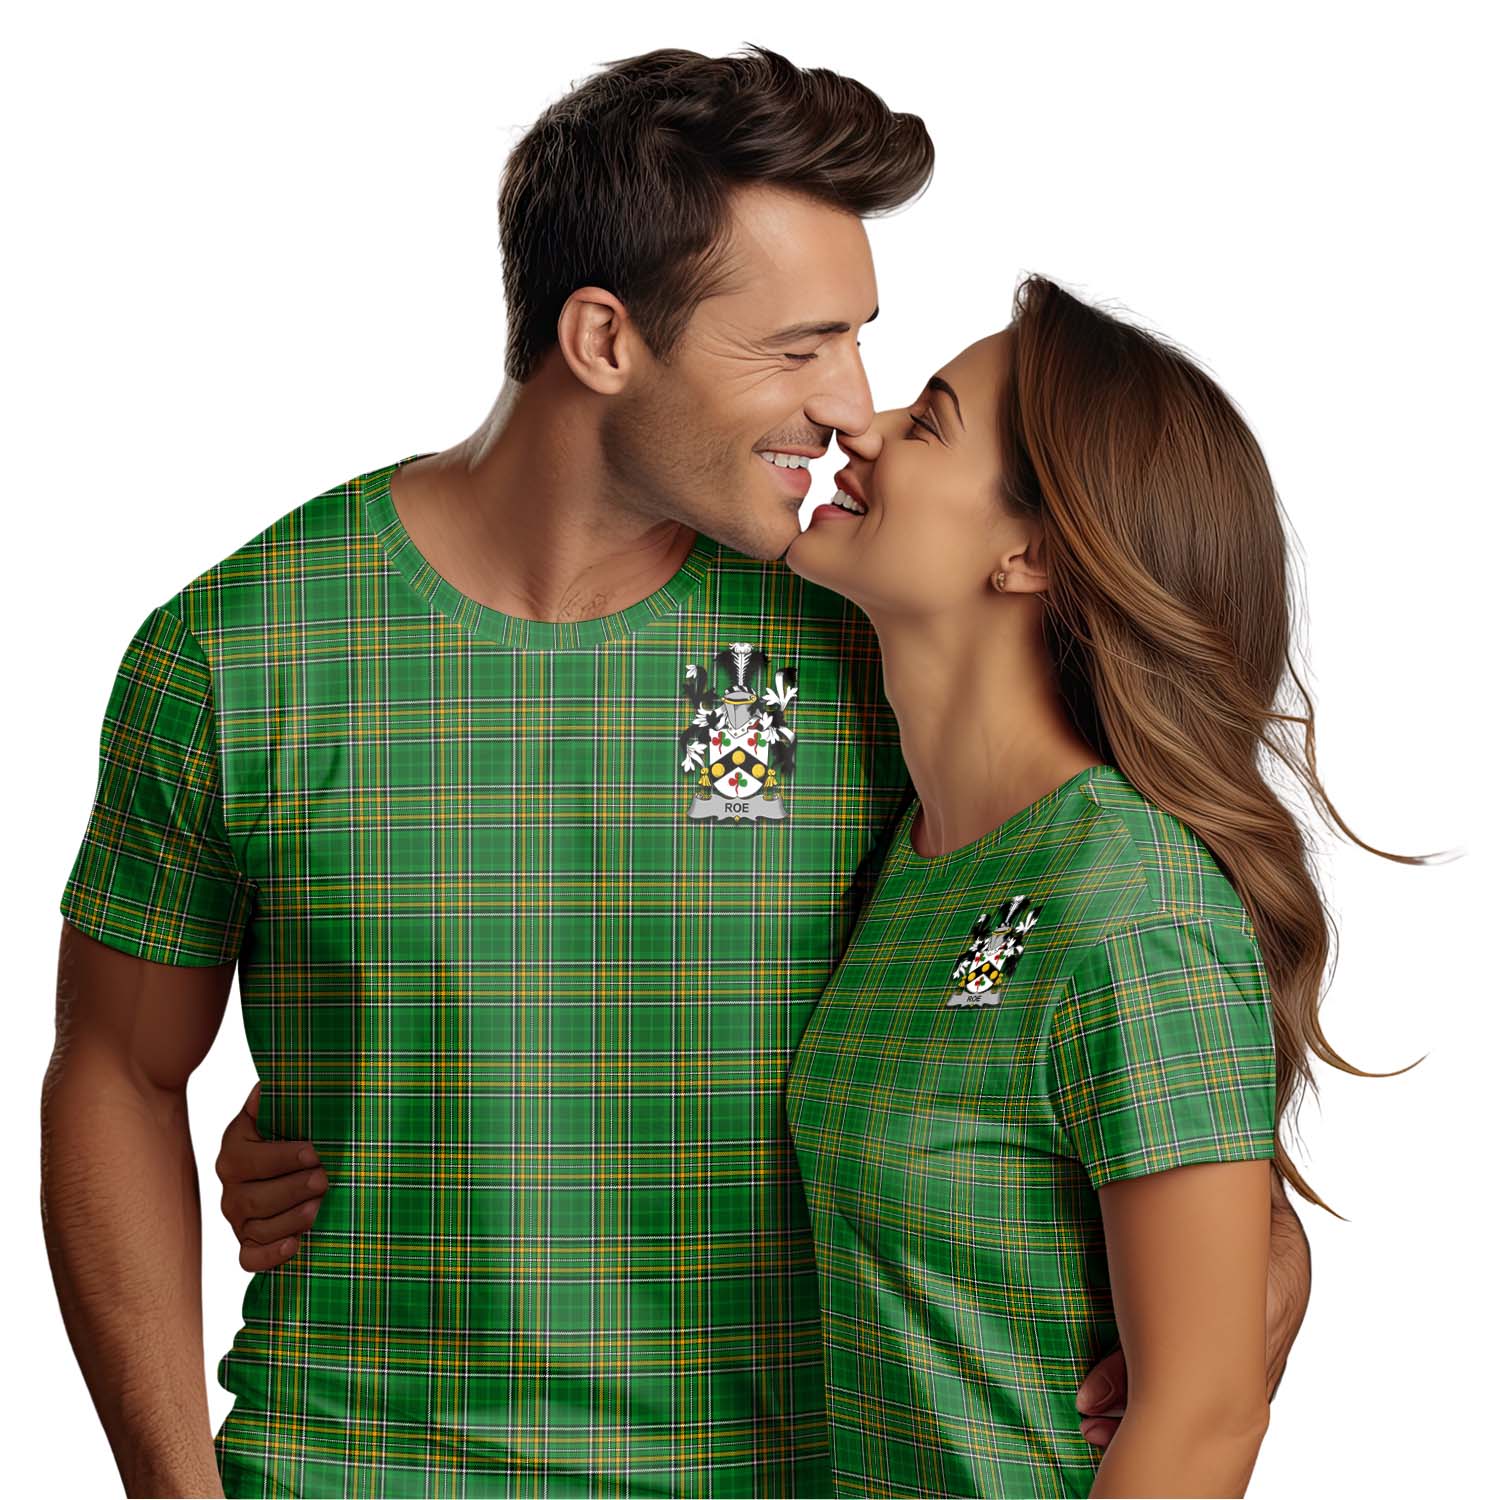 Tartan Vibes Clothing Roe Ireland Clan Tartan T-Shirt with Family Seal